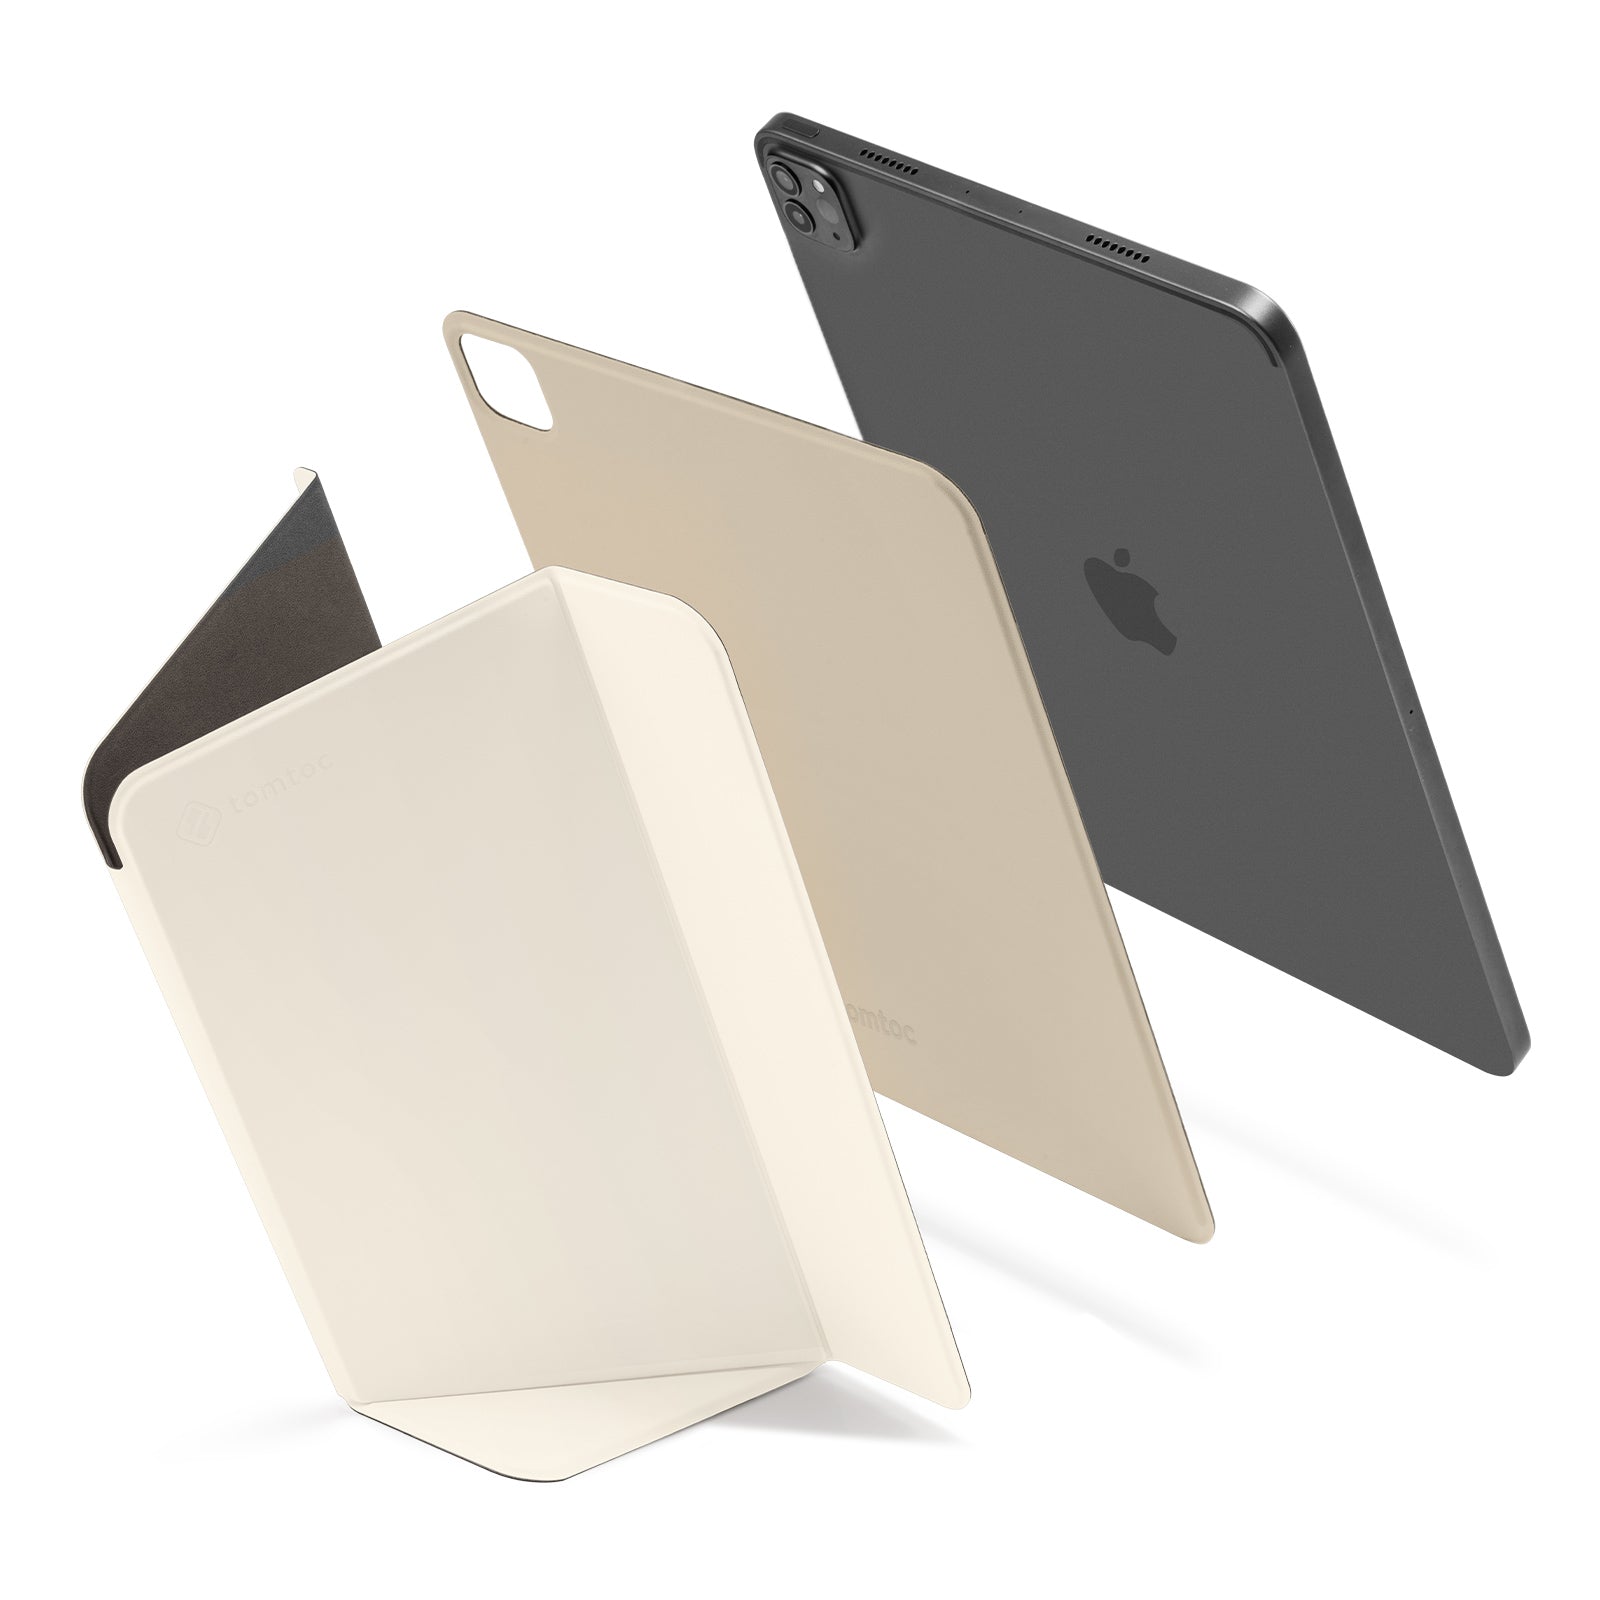 iPad Pro 12.9 inch Smart Folio Case for iPad Pro 4th, 5th [3